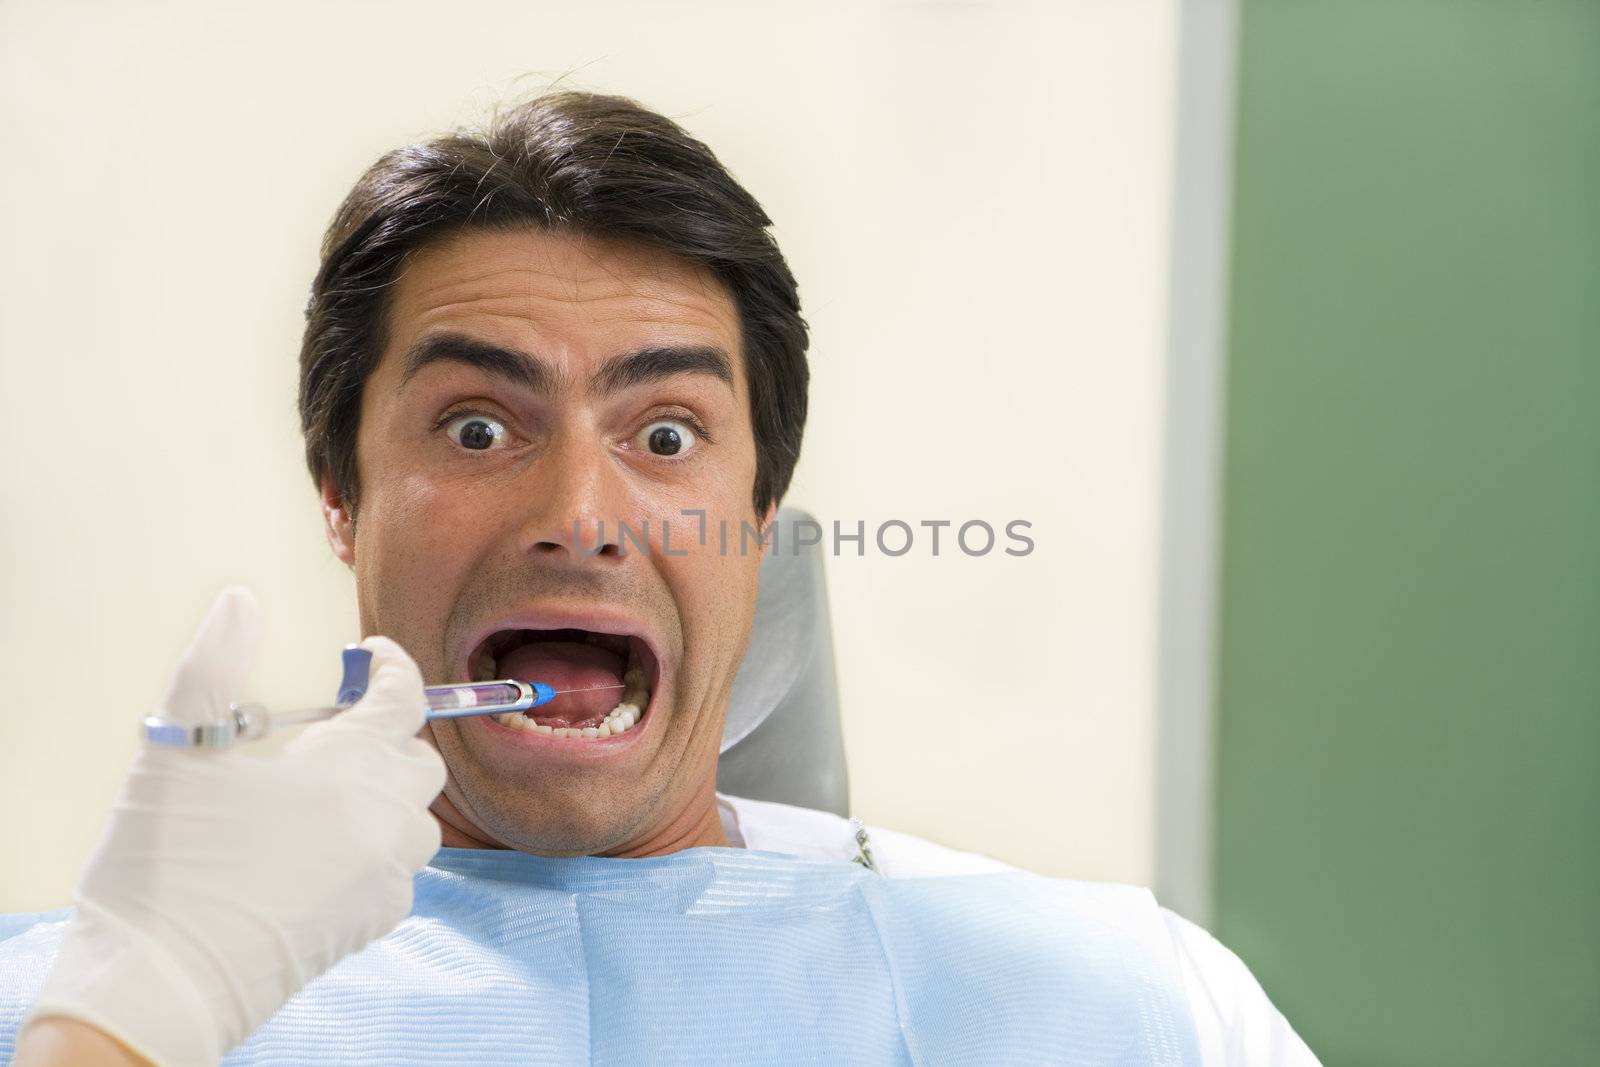 dentist by diego_cervo